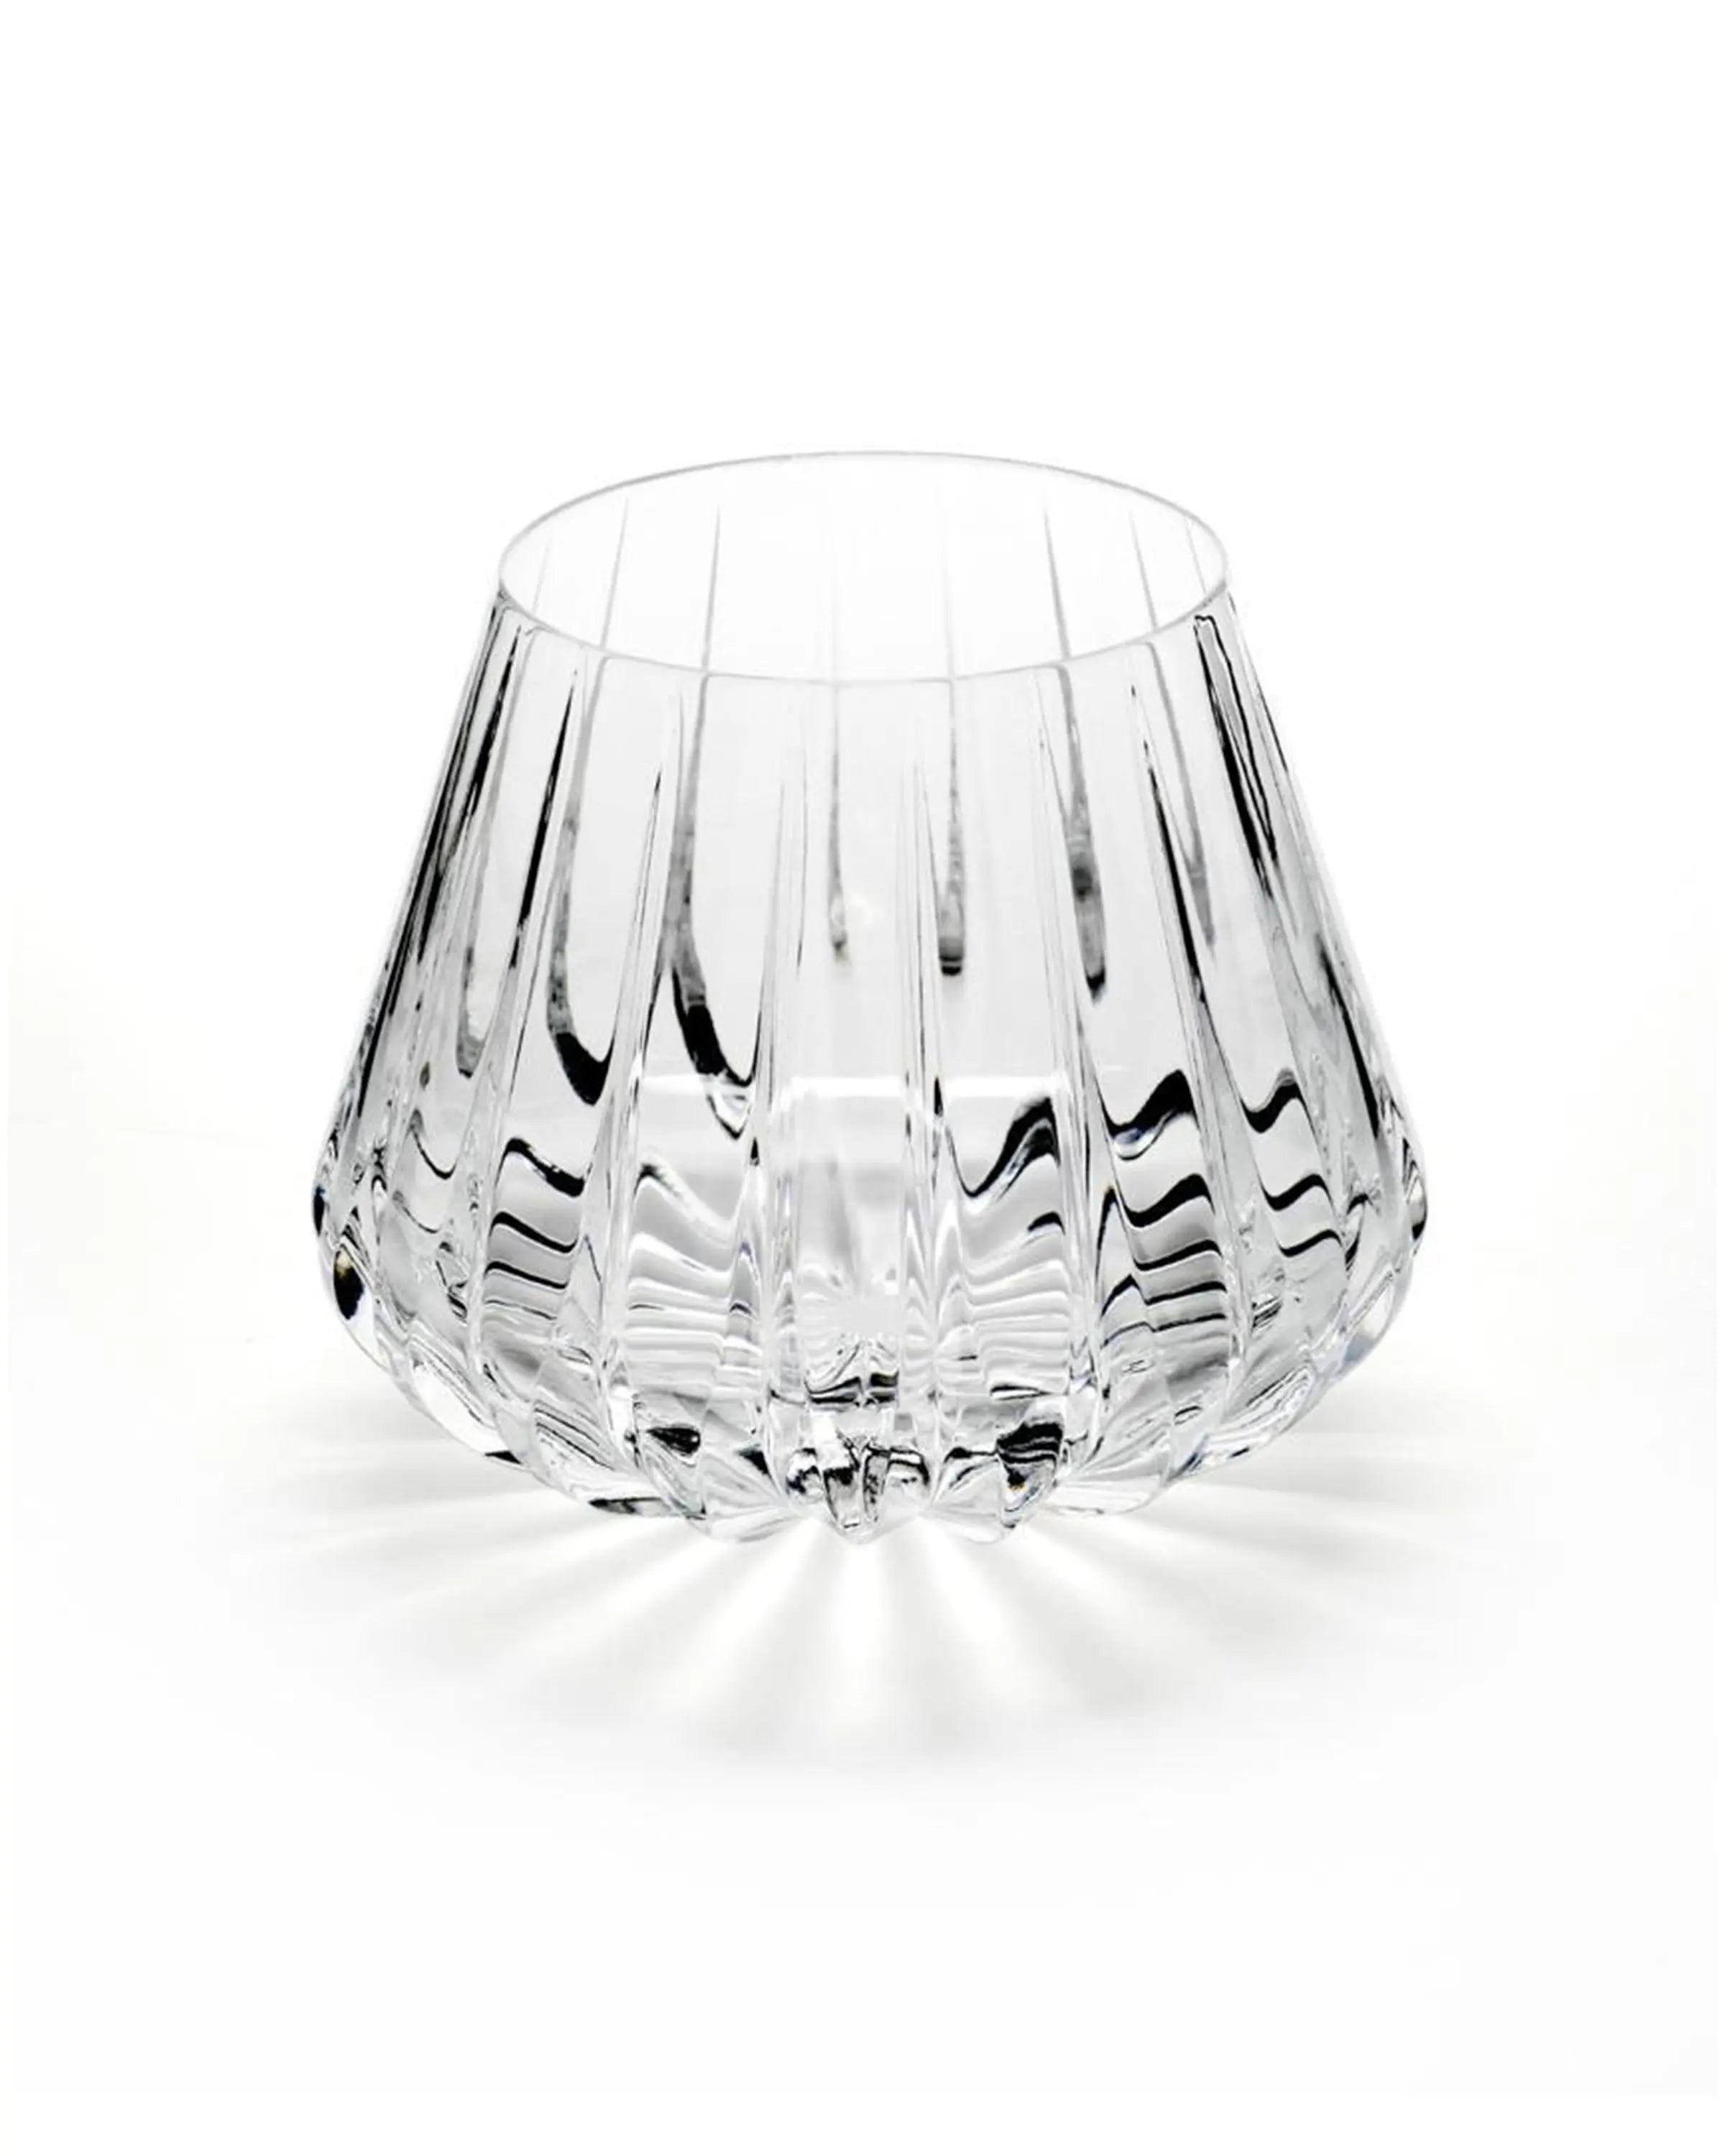  Exquisite Crystal Glassware